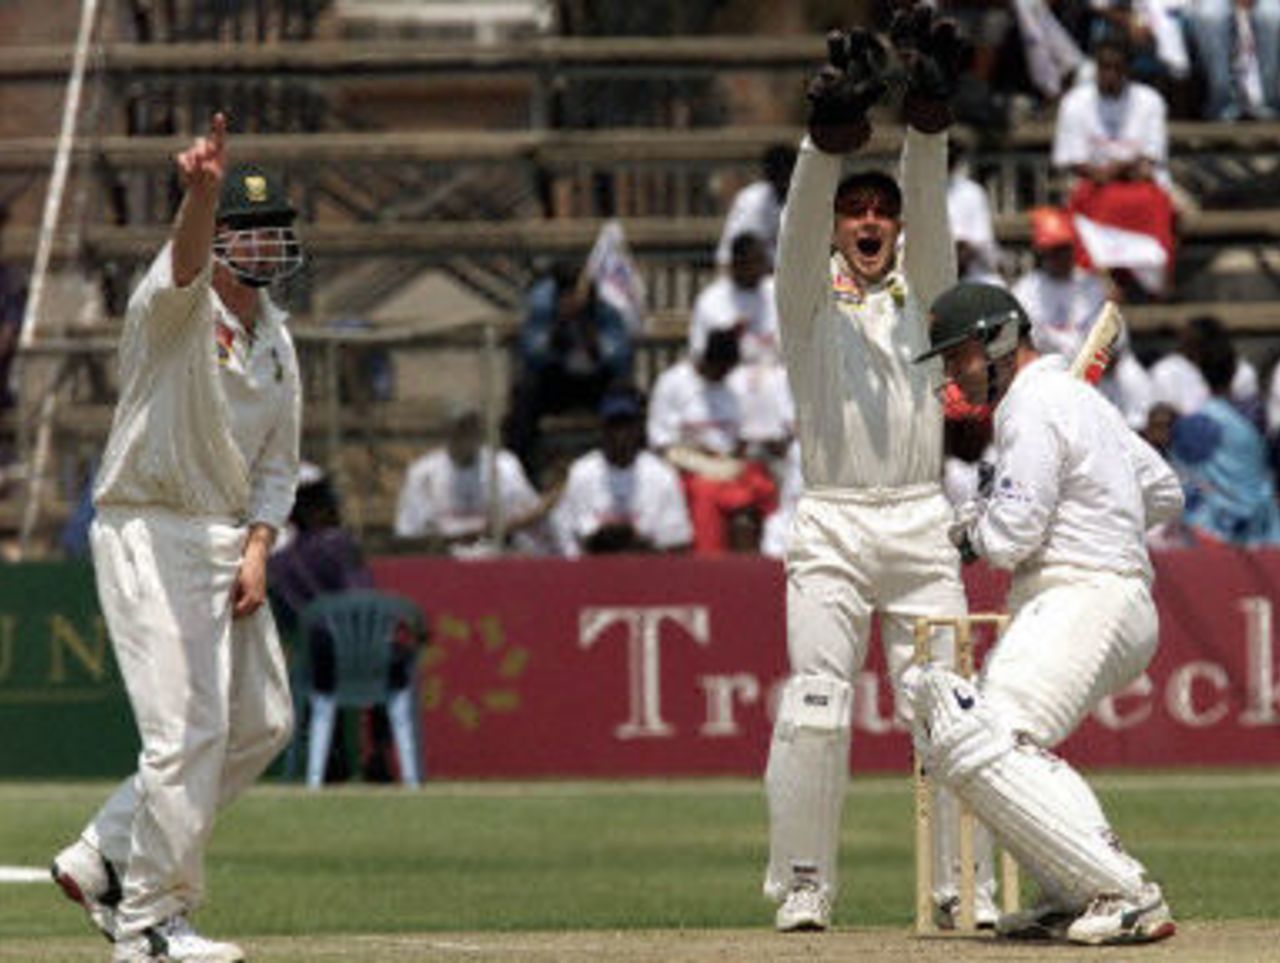 Mark Boucher and Lance Klusener appealing for Heath Streak's lbw, Ist Test South Africa v Zimbabwe, 7-11 September 2001, at Harare.